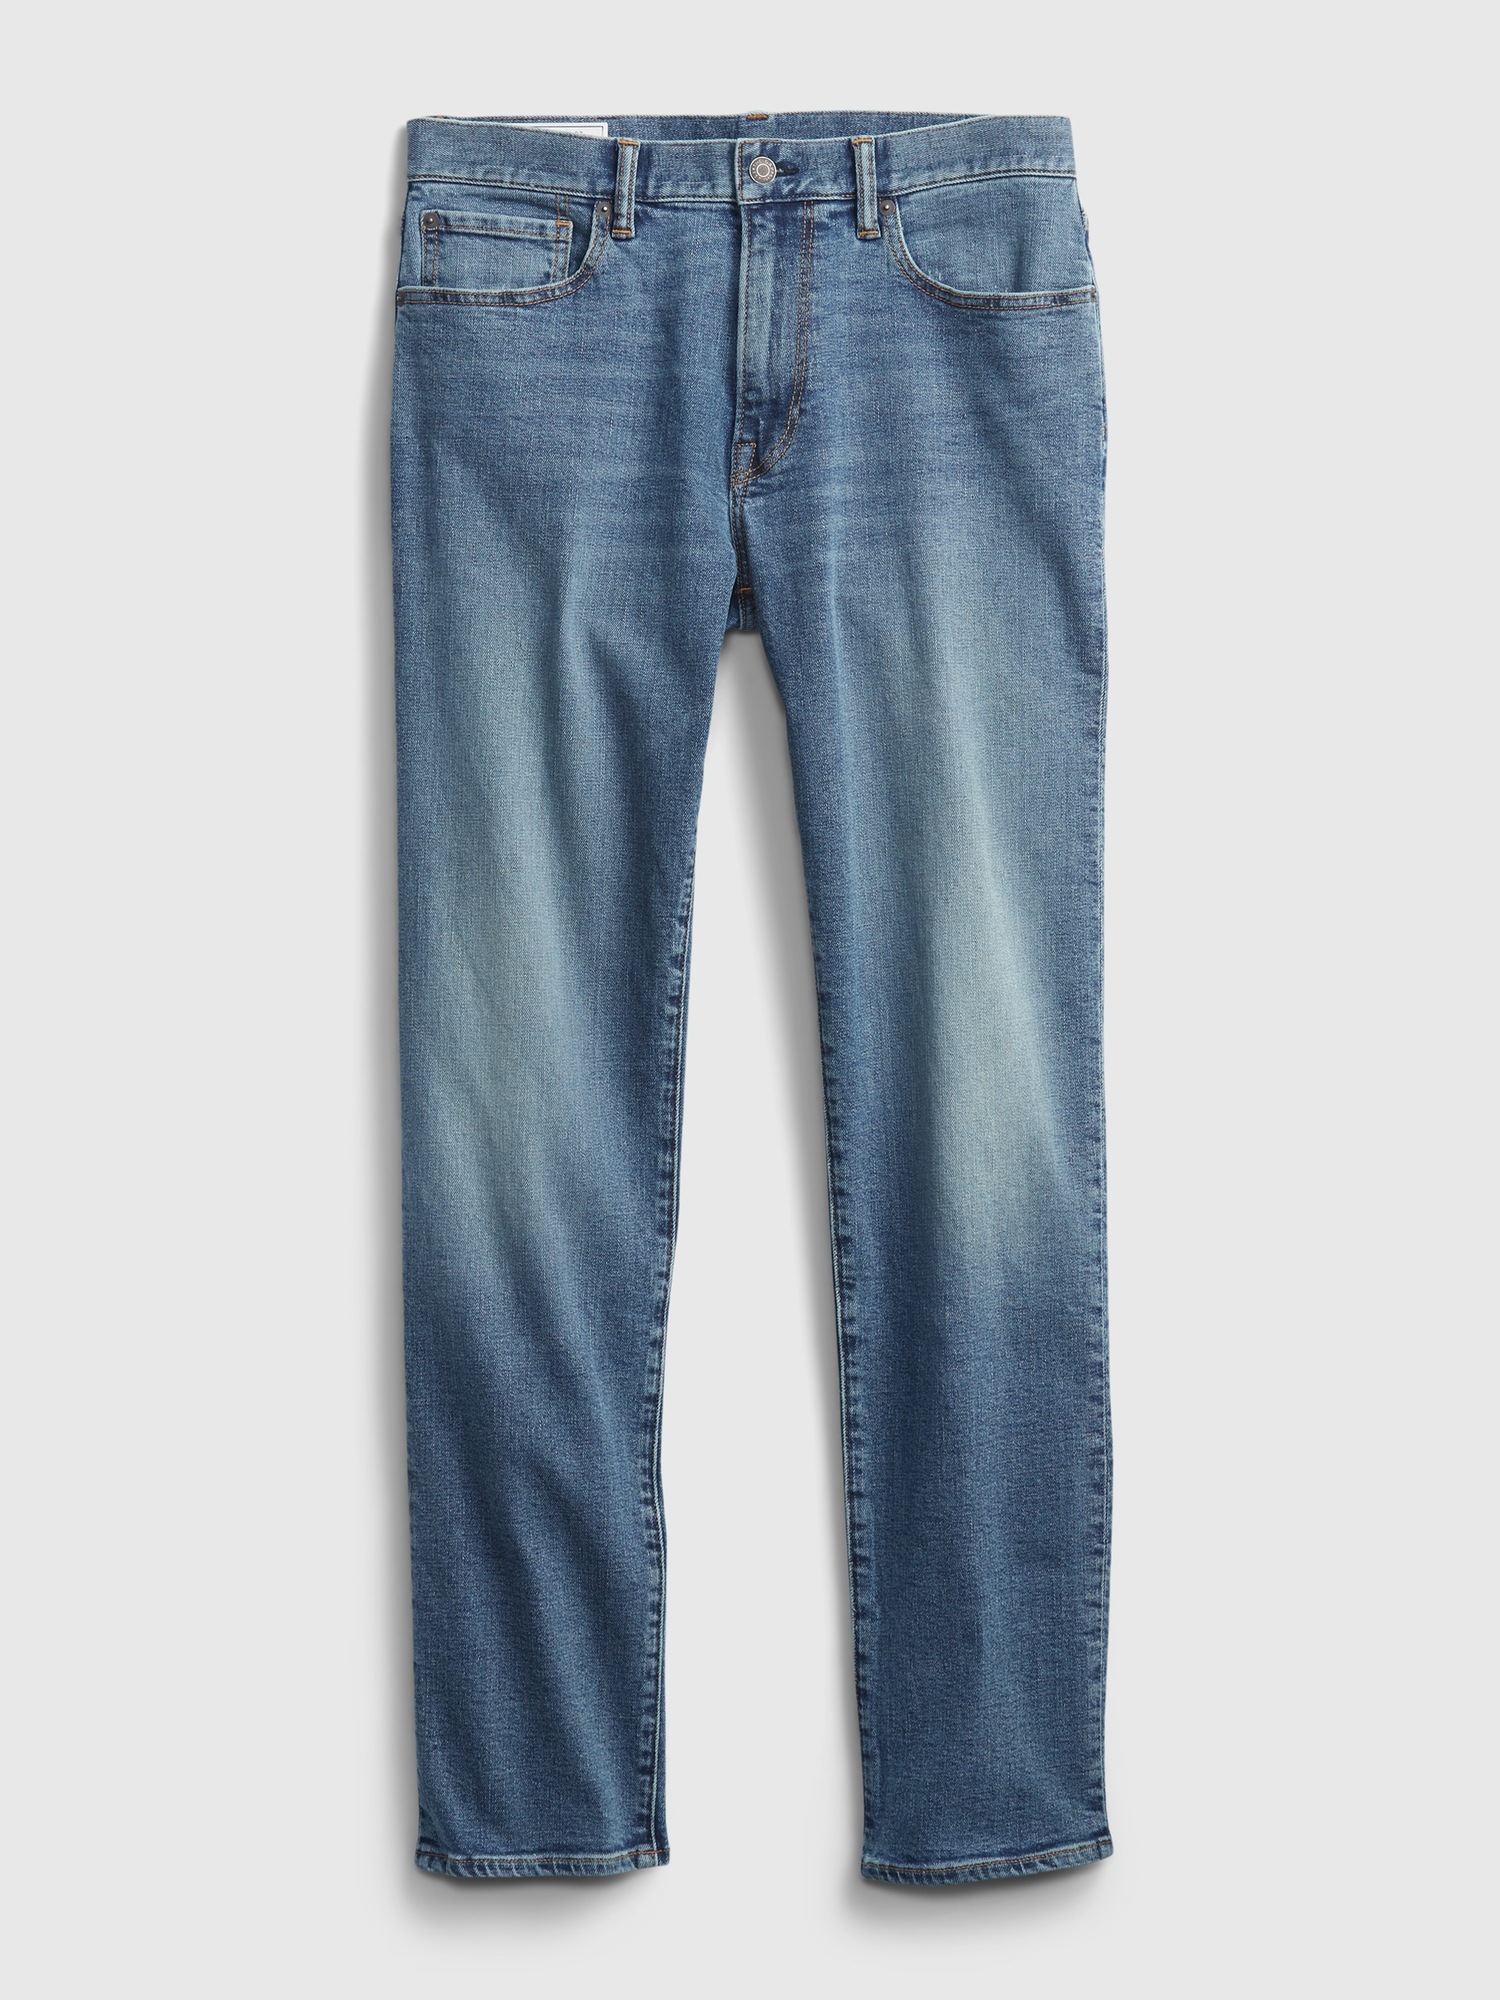 Gap Soft Wear Straight Jeans with GapFlex - ShopStyle